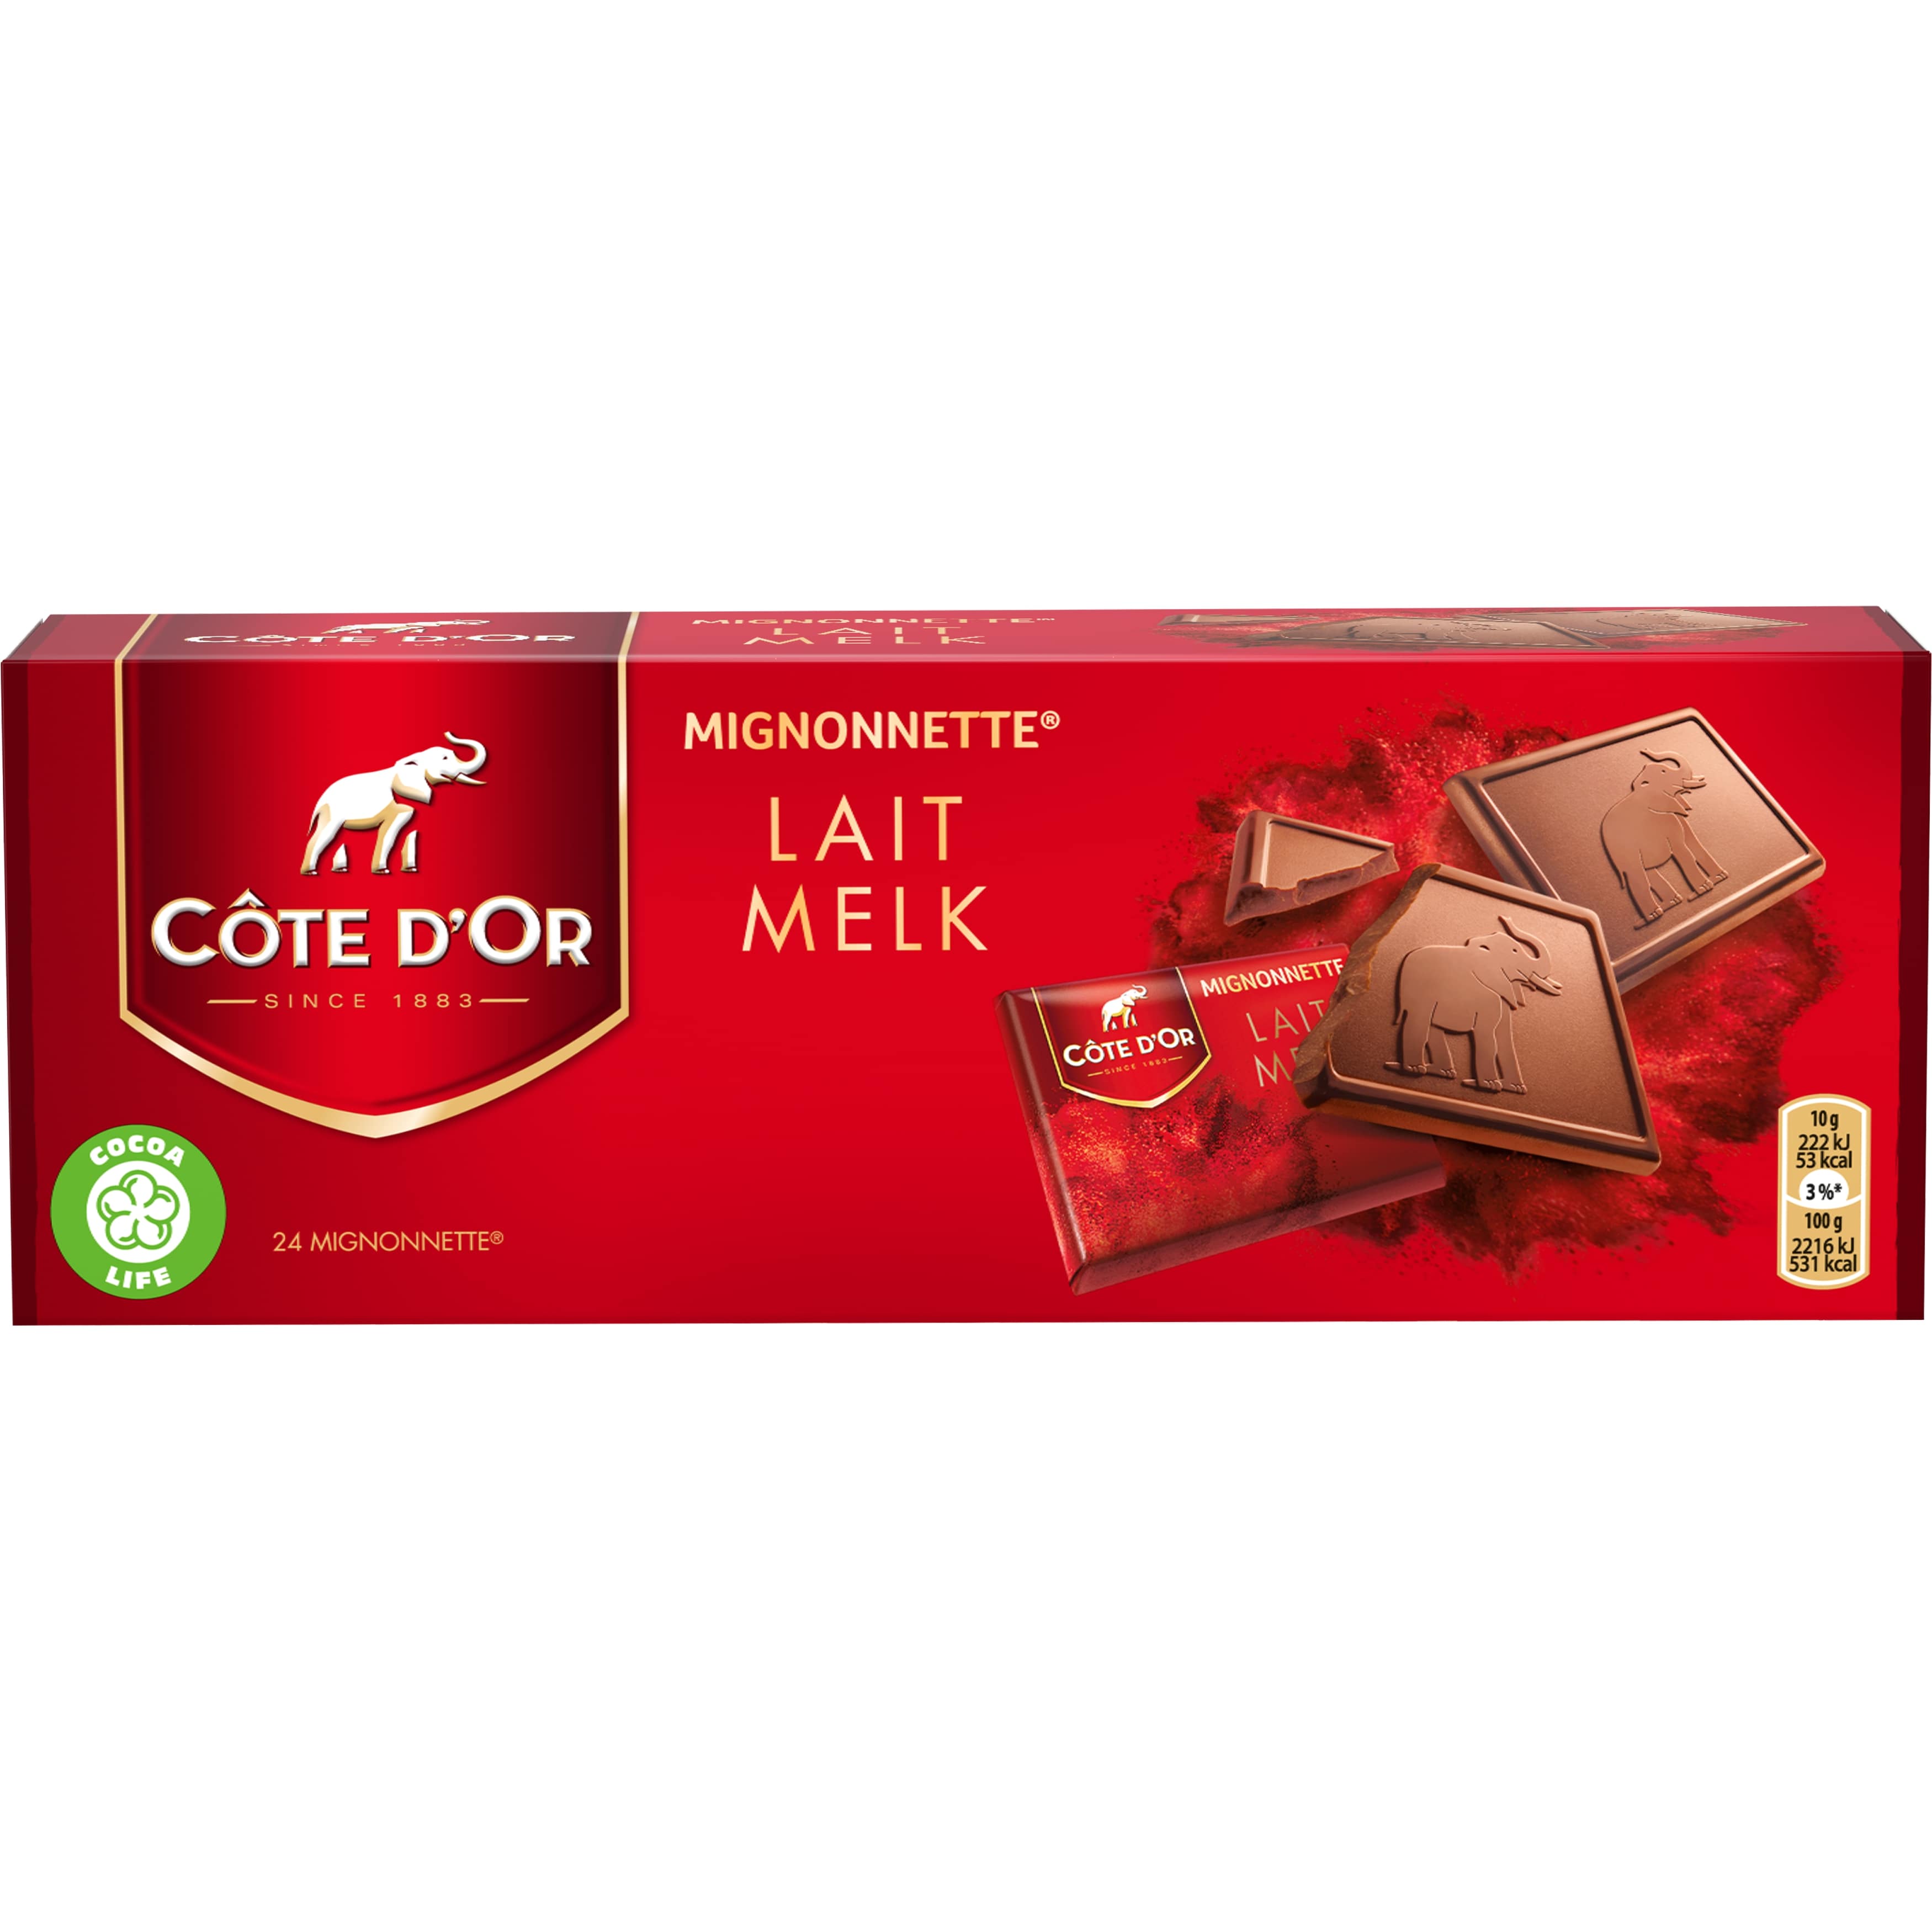 Côte d'Or Intense 70% Dark Chocolate 100g